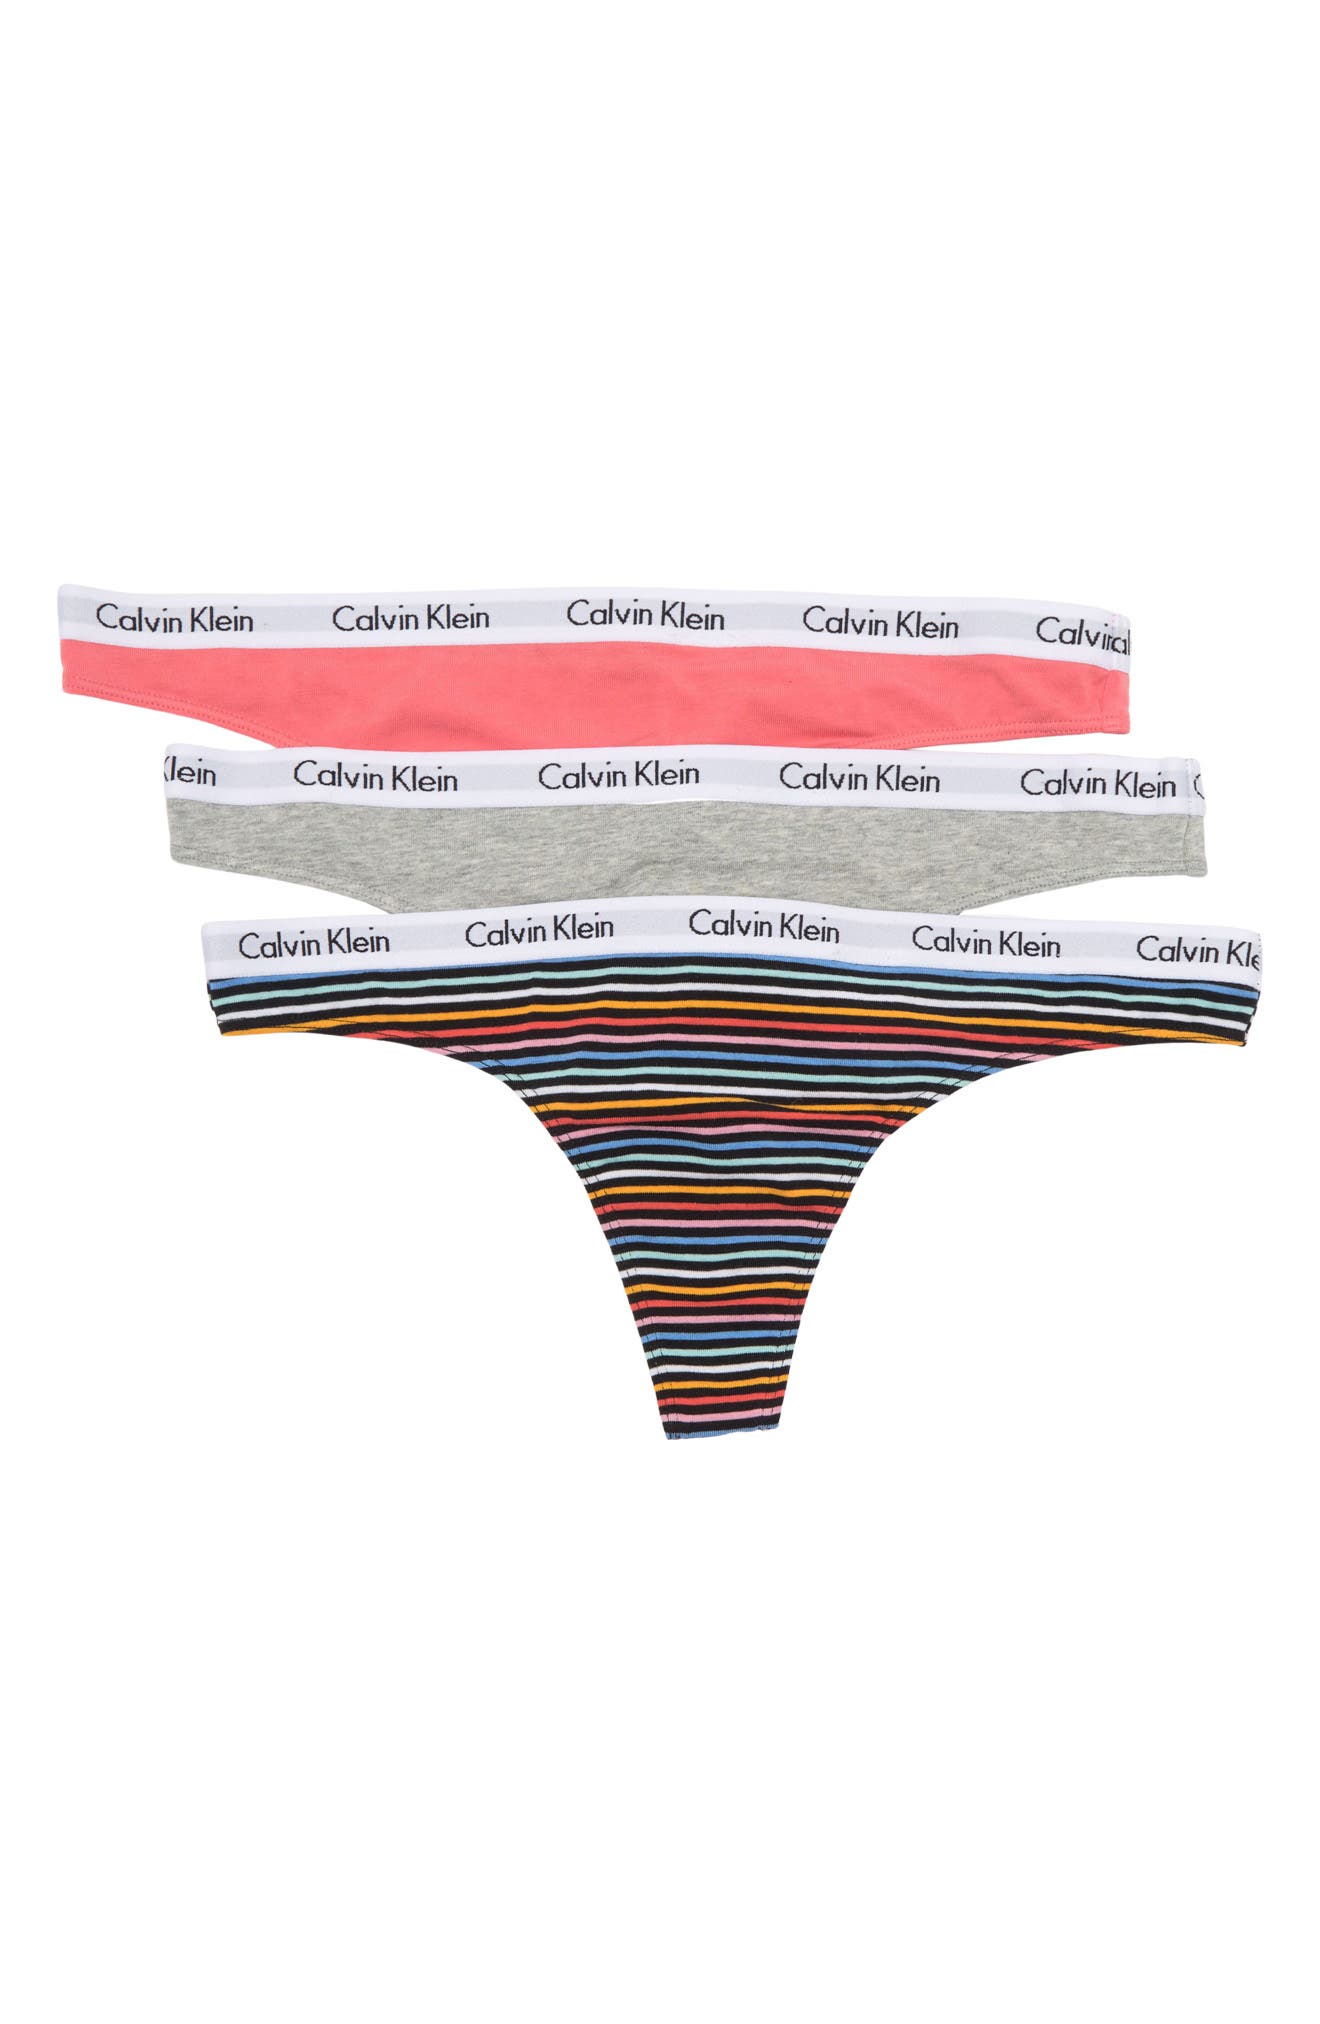 Calvin Klein Underwear Carousel 3 Pack Thong in Stripe Charm, Grey